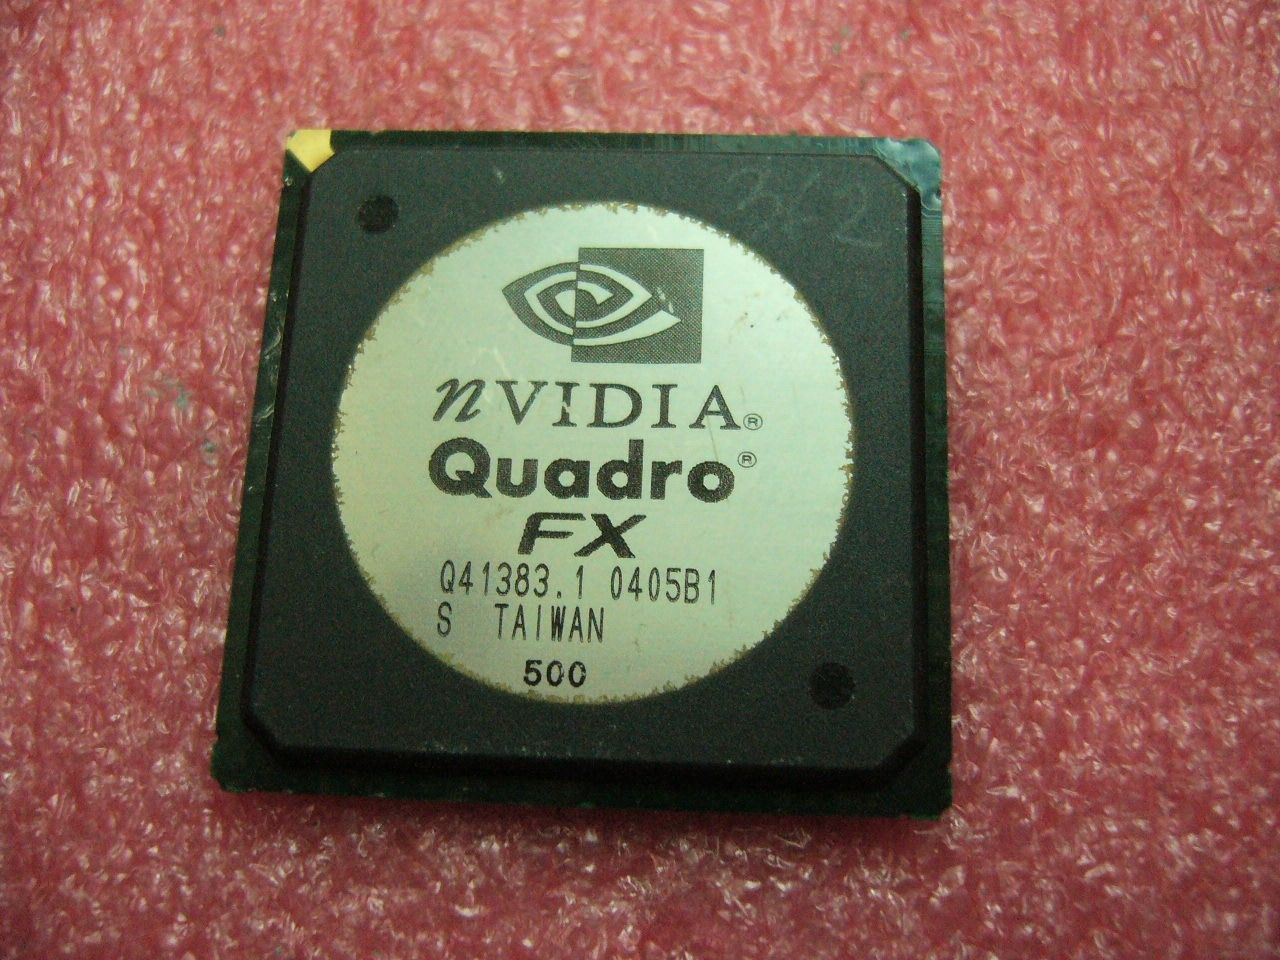 QTY 1x nVidia Quadro FX 500 GPU - zum Schließen ins Bild klicken